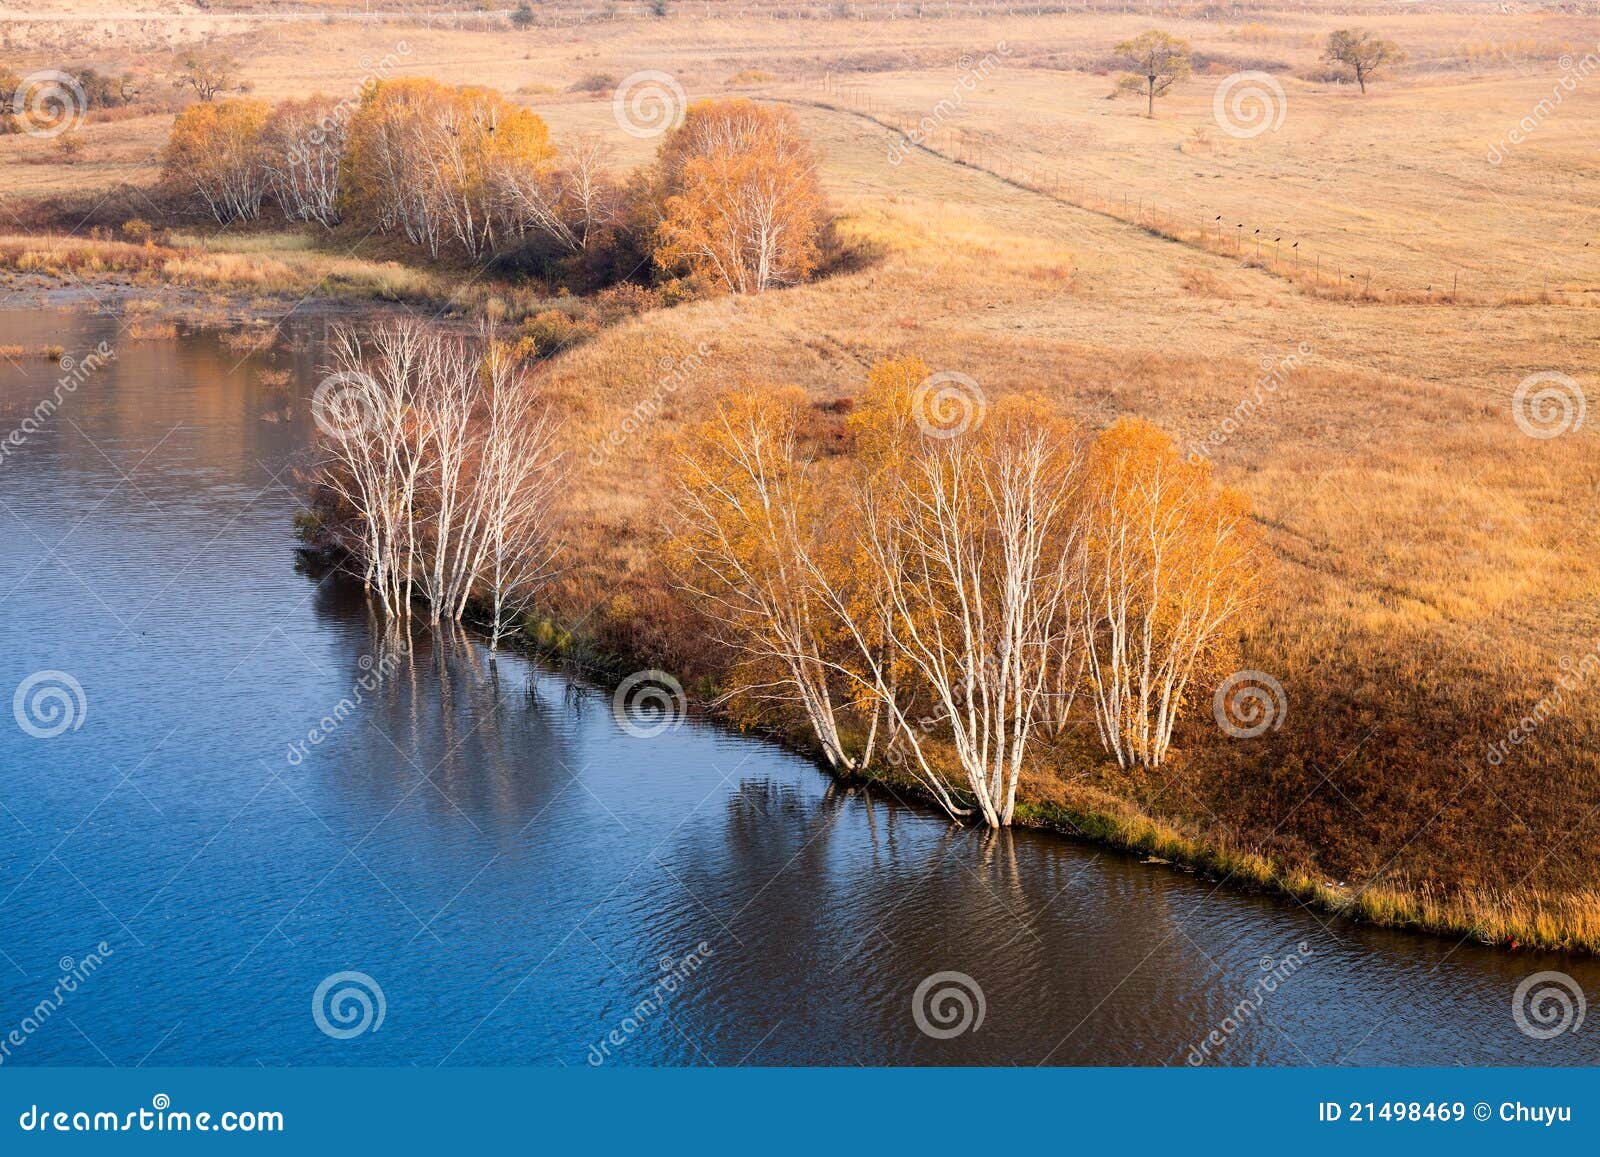 waterside birch trees in autumn